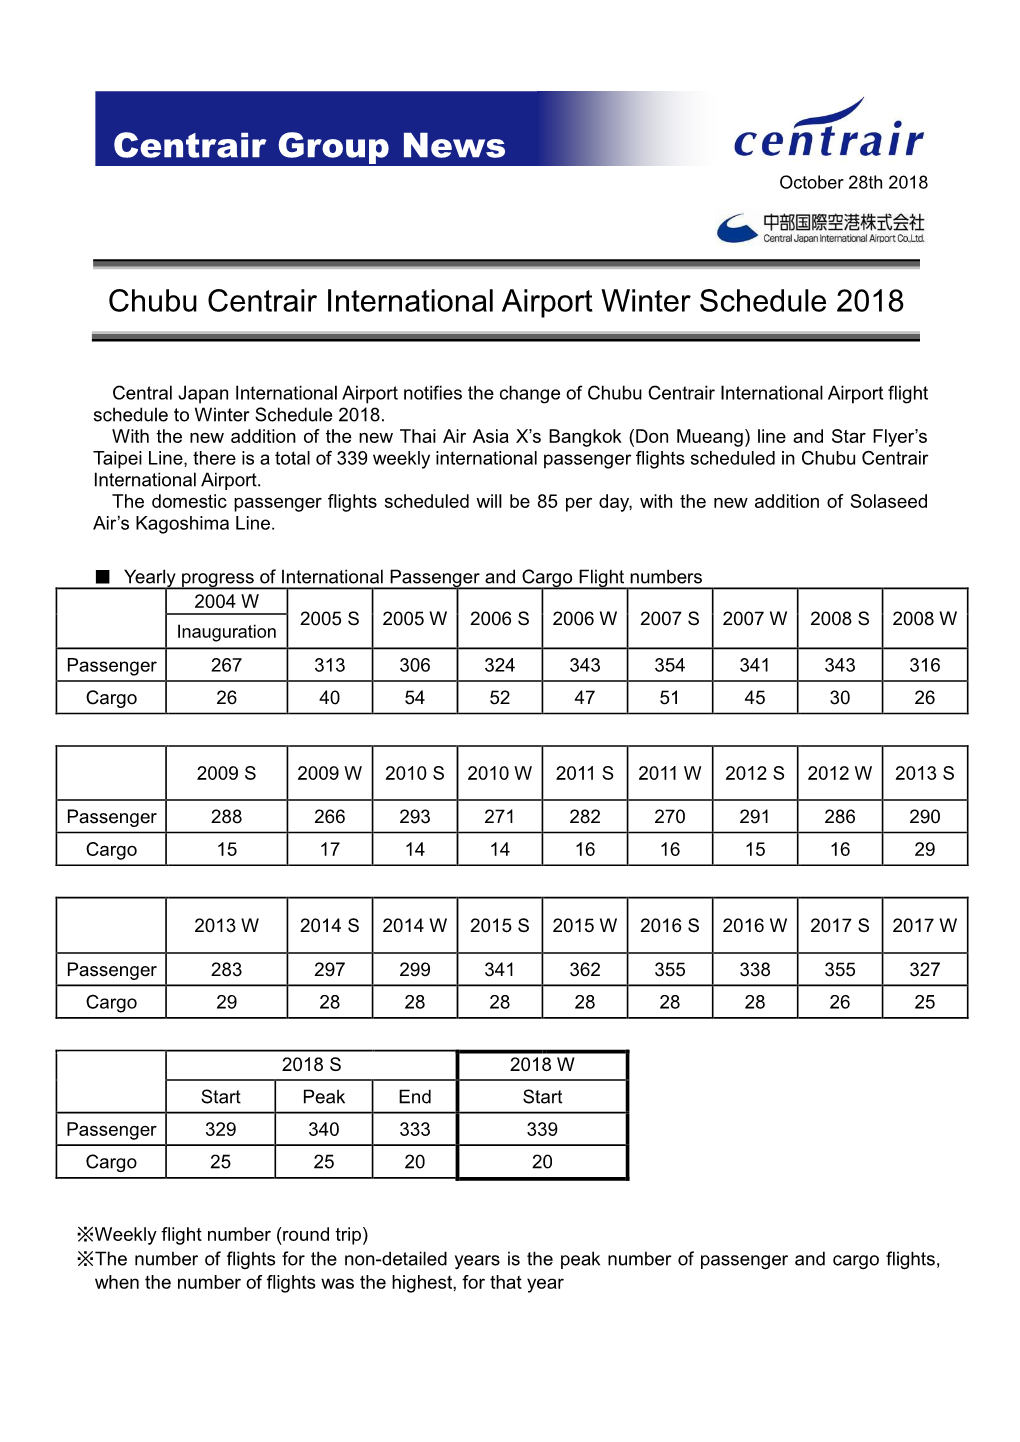 October 28, 2018 Chubu Centrair International Airport Winter Schedule 2018 Information